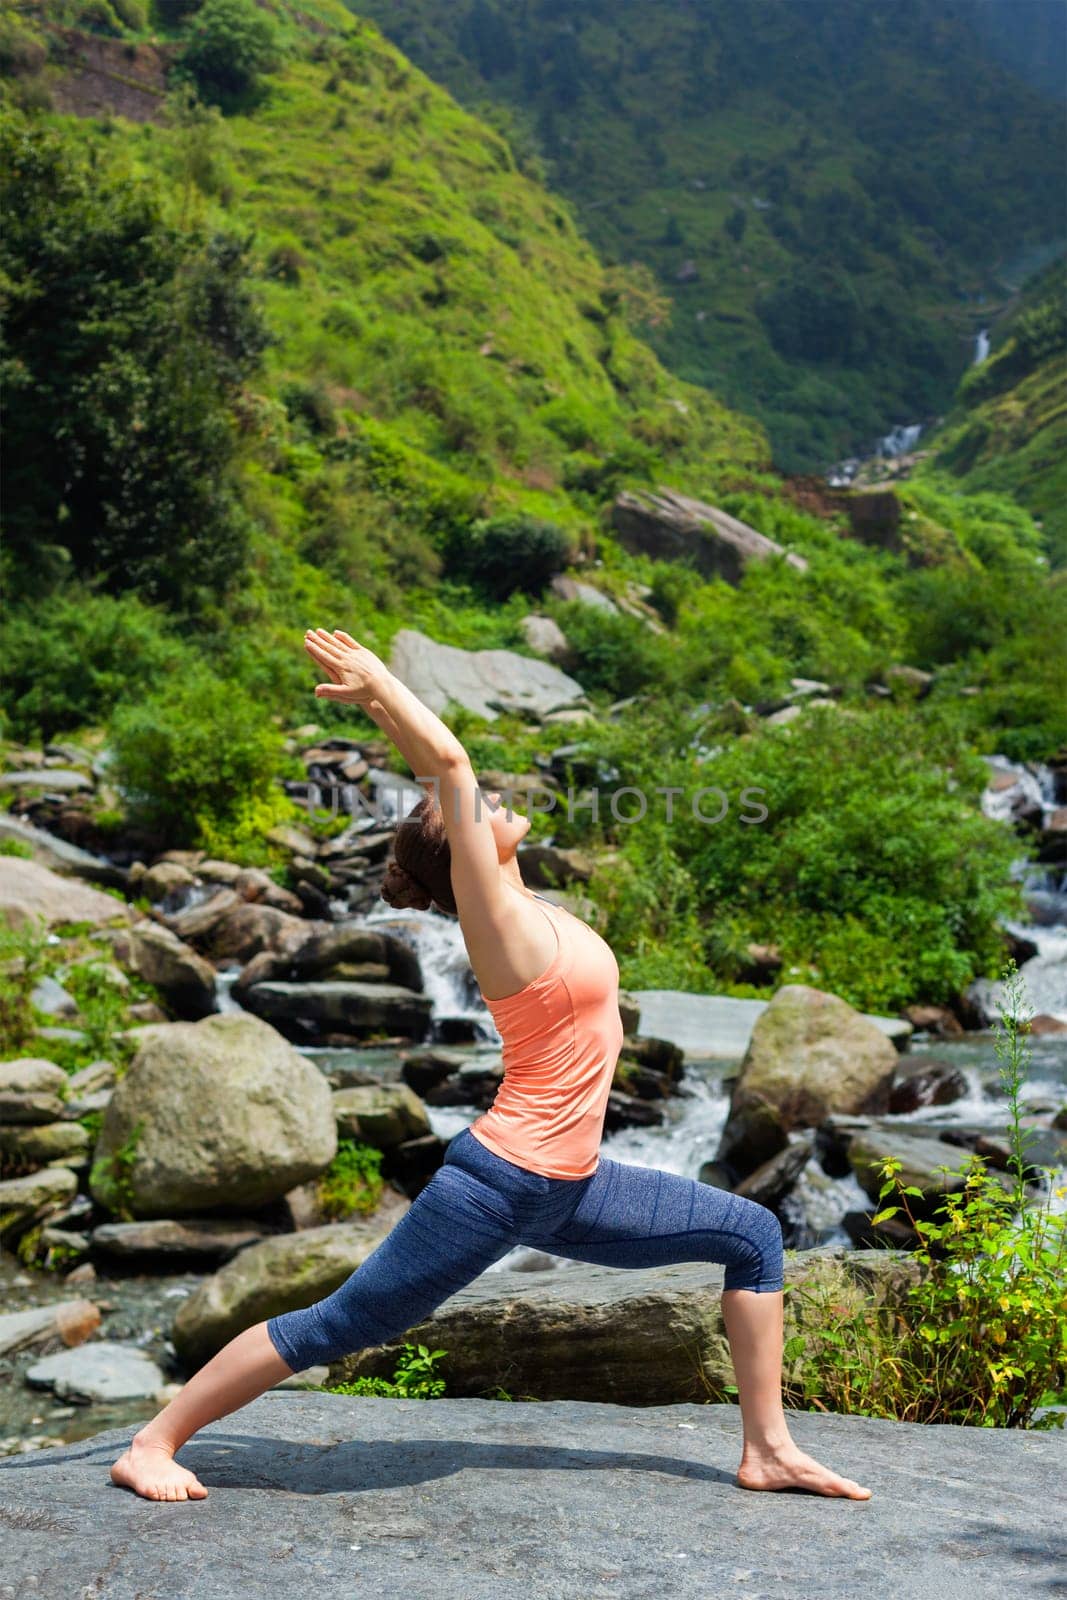 Yoga outdoors - sporty fit woman doing Ashtanga Vinyasa Yoga asana Virabhadrasana 1 Warrior pose posture at waterfall in HImalayas mountains